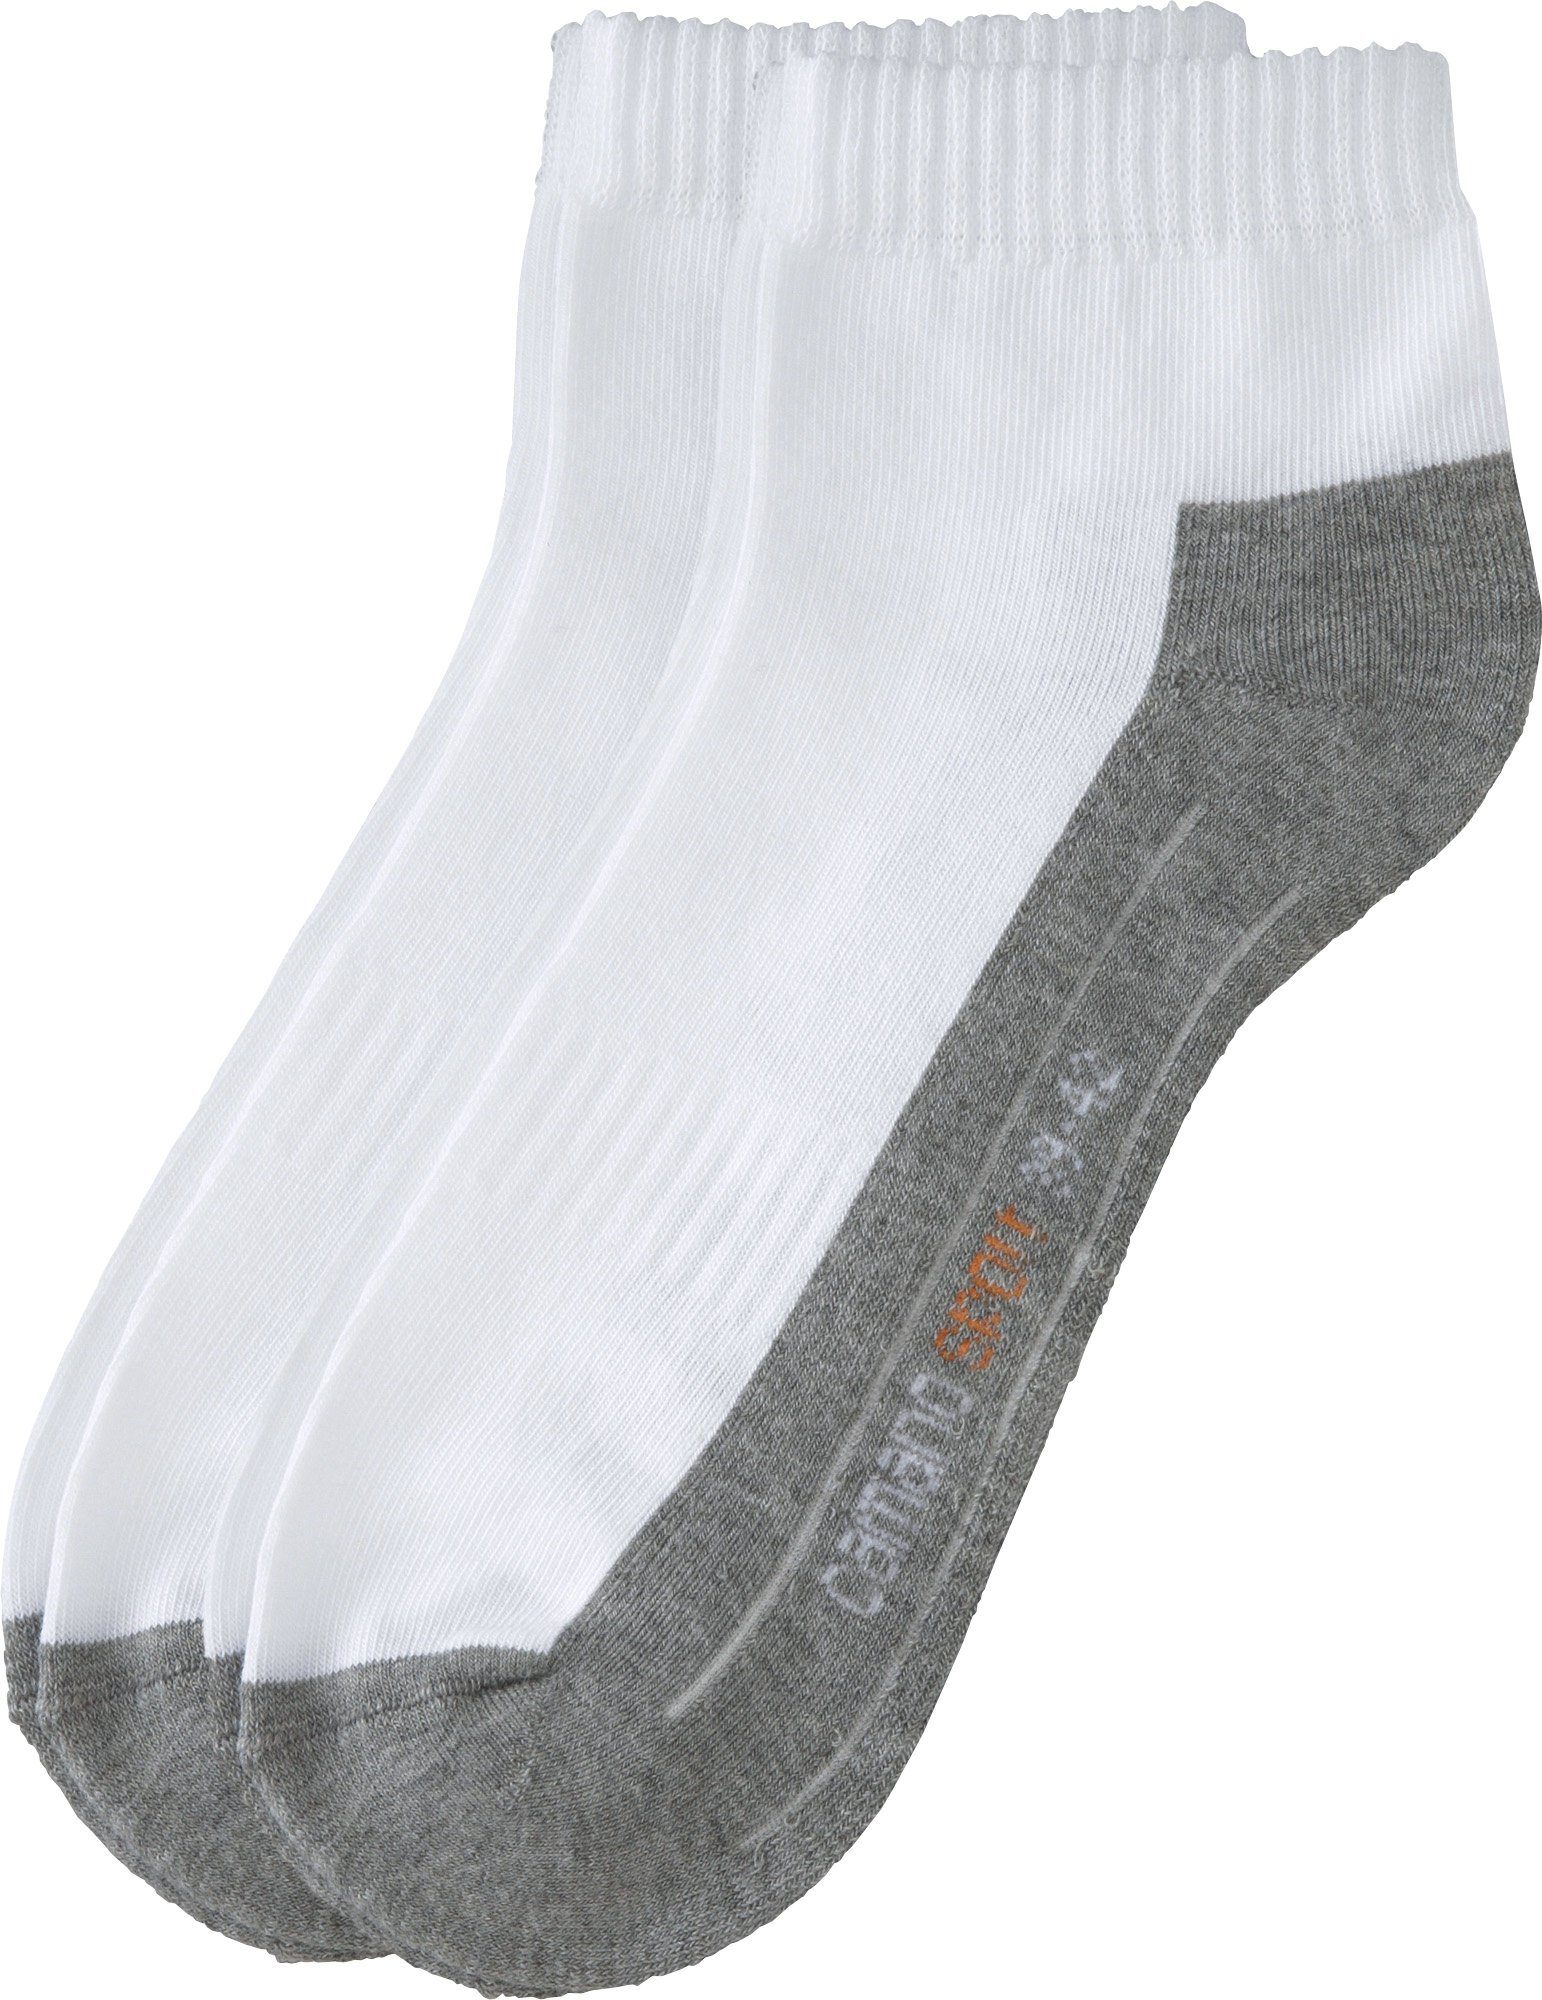 Unisex-Sport-Kurzsocken Socken Uni Camano weiß Paar 2